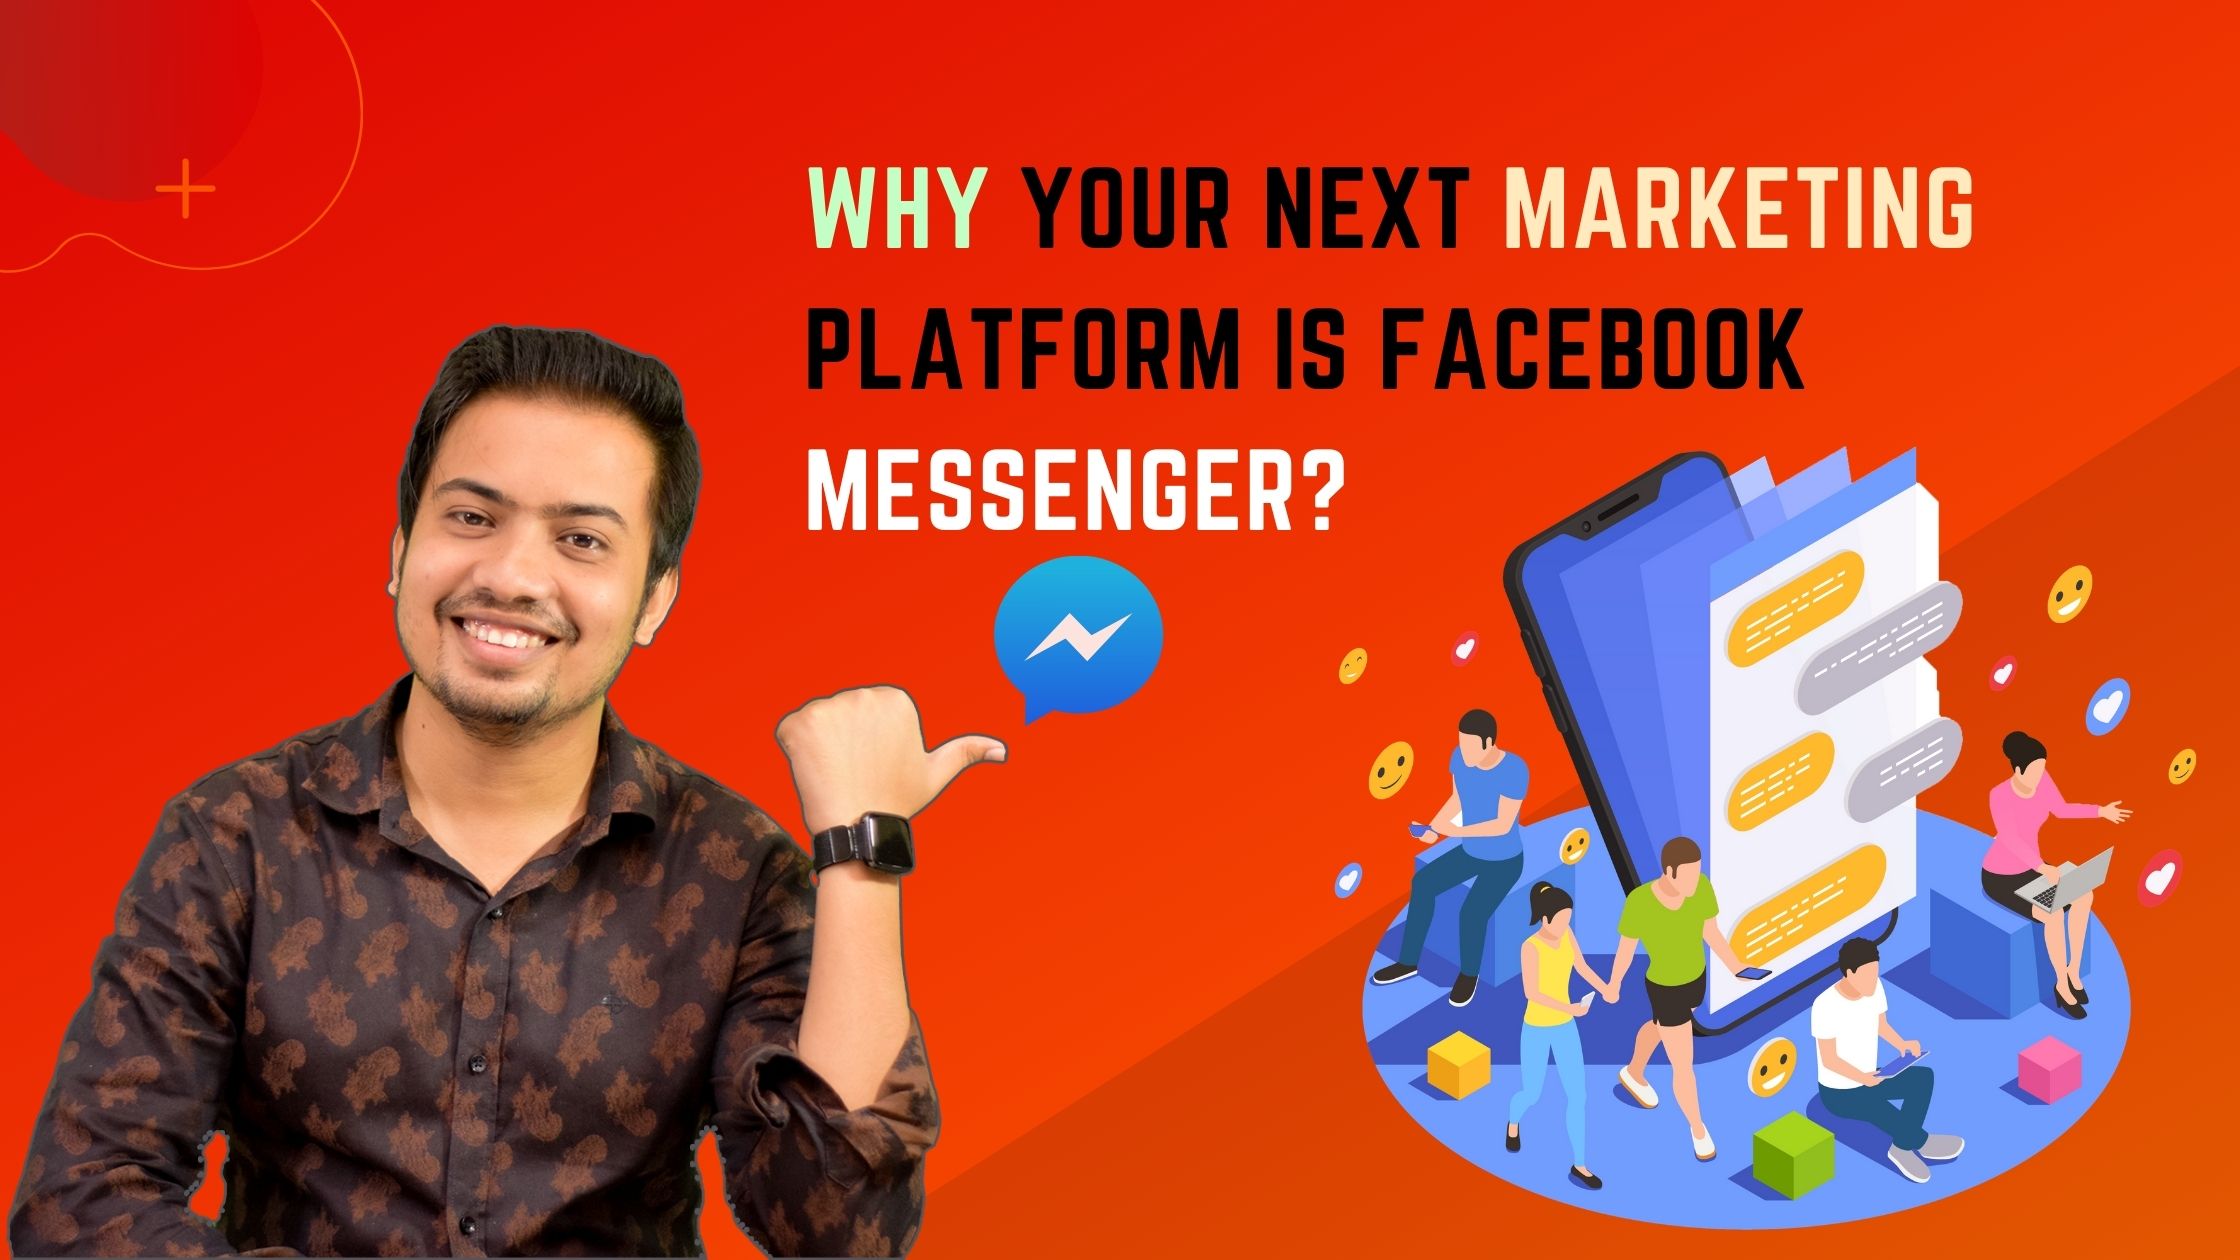 Facebook Messenger marketing